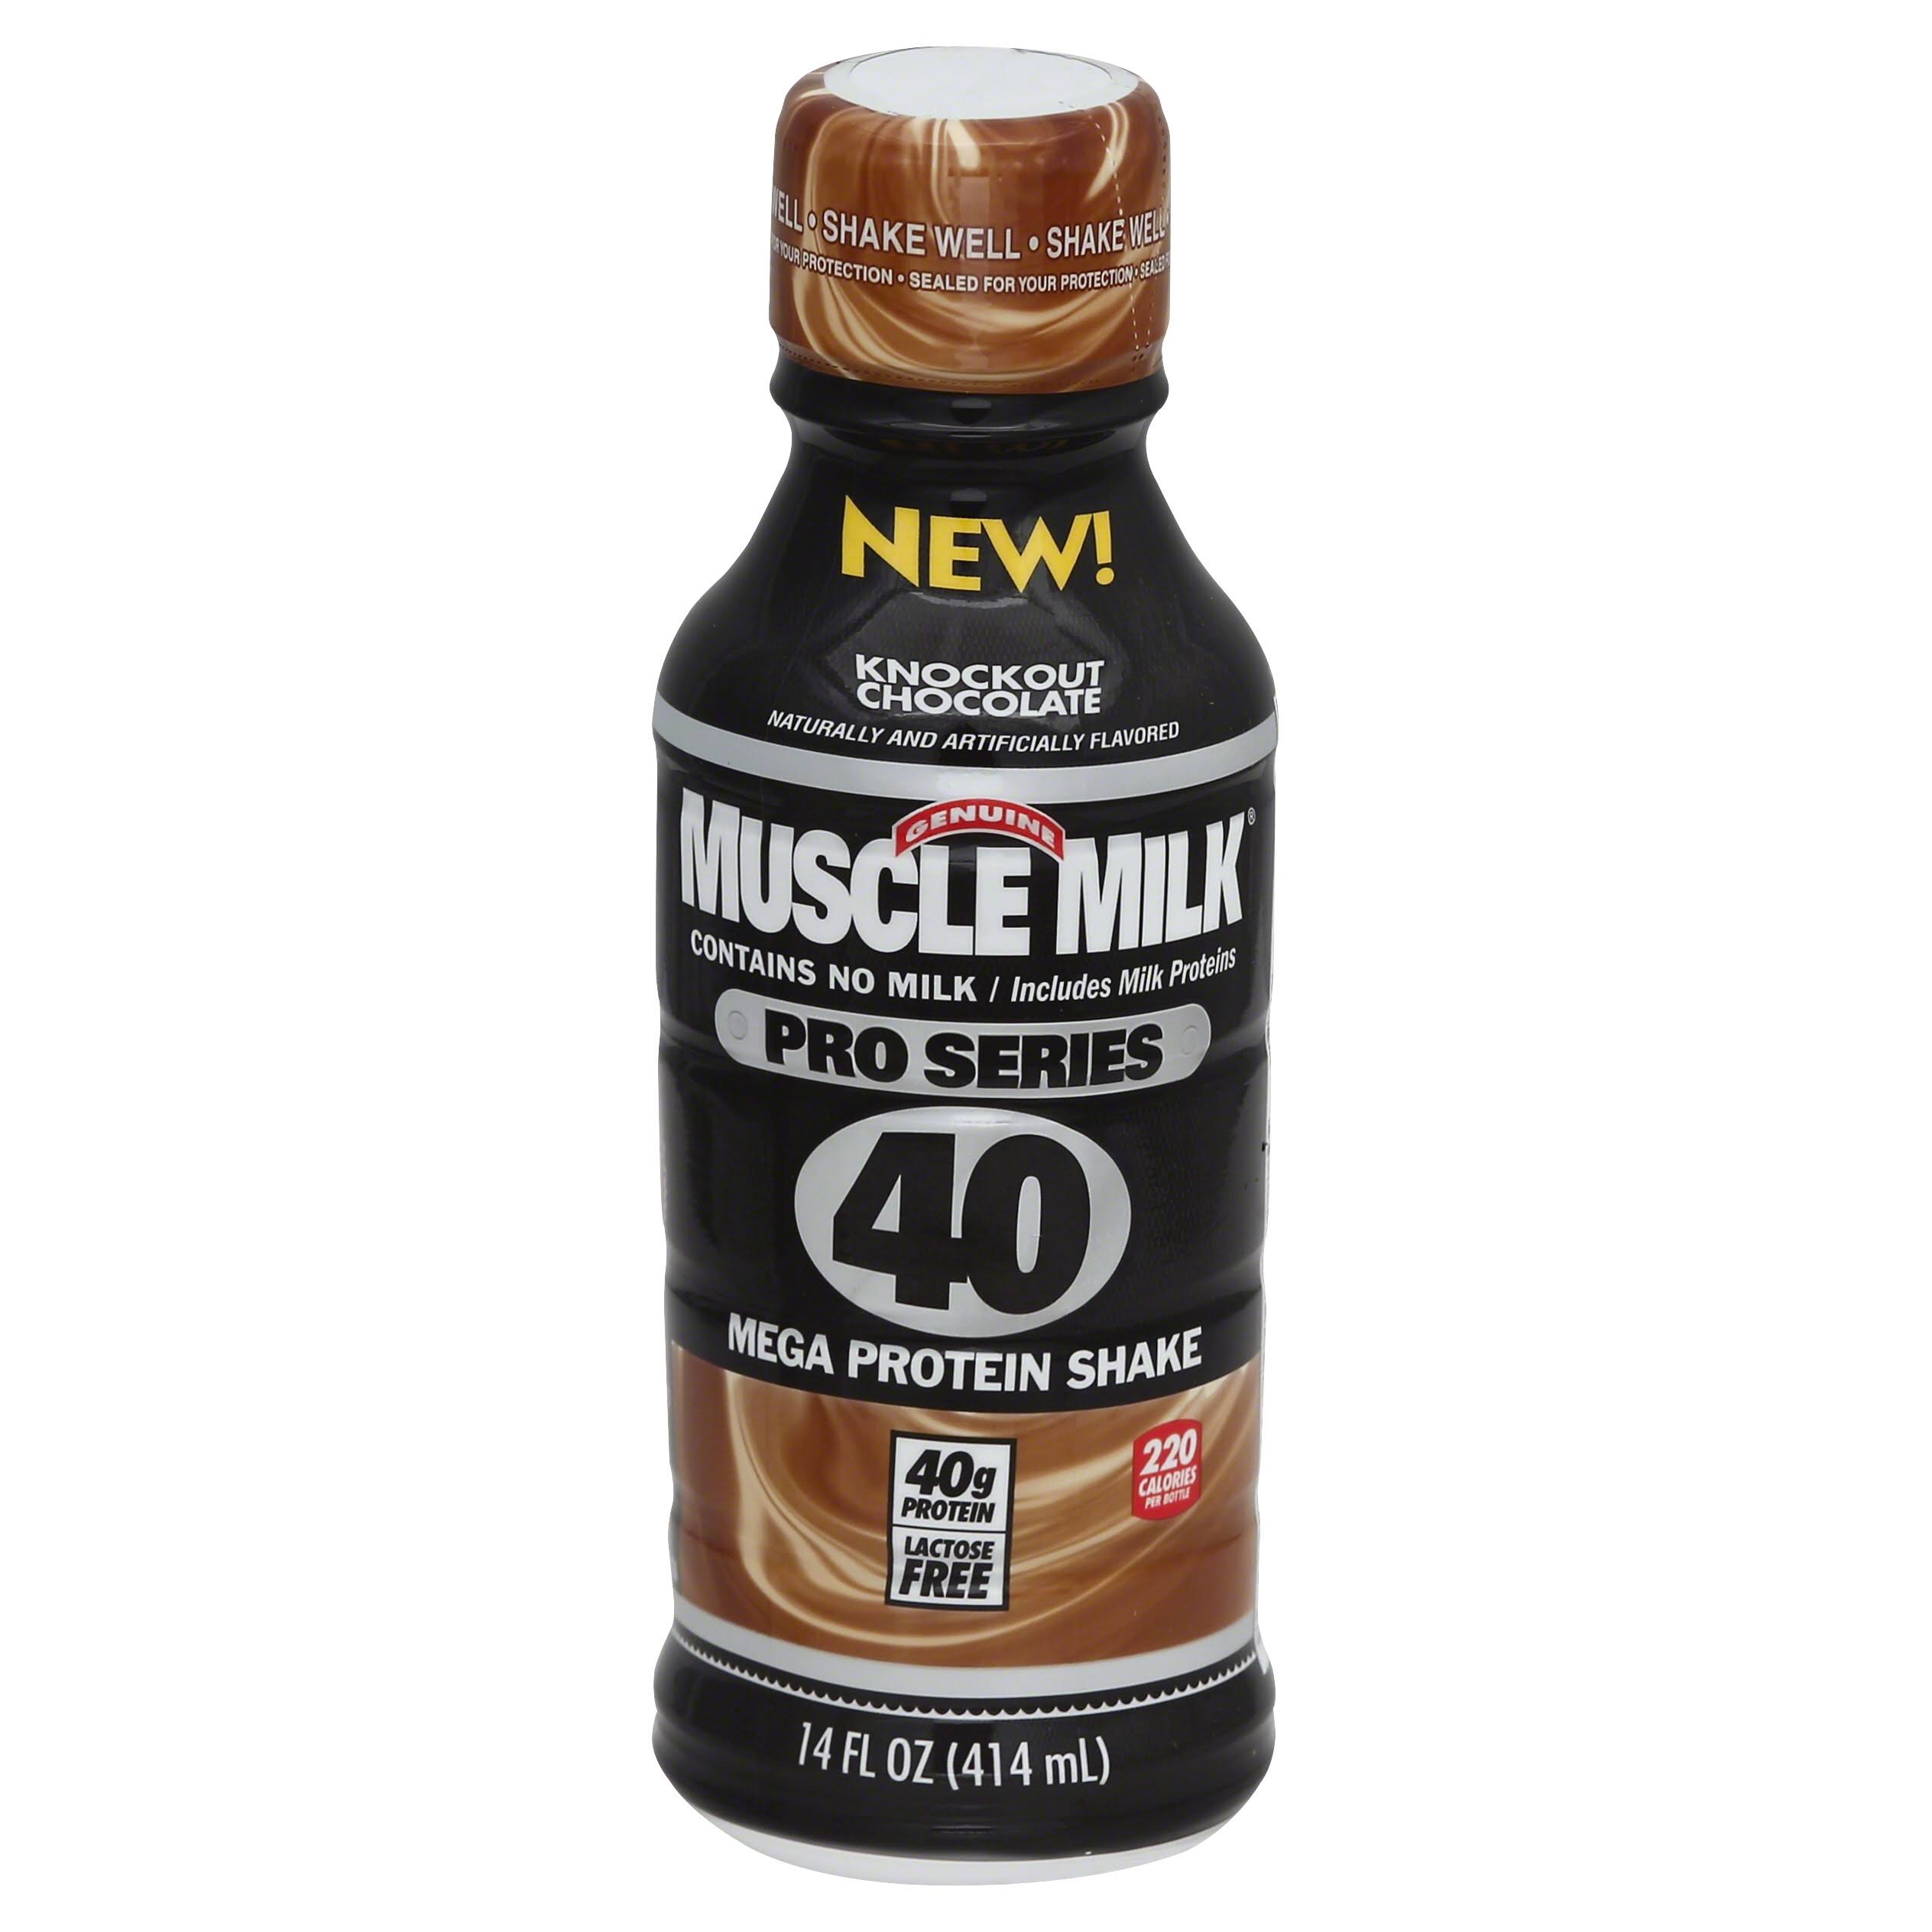 Muscle milk pro series choc knokout 12ct 14oz